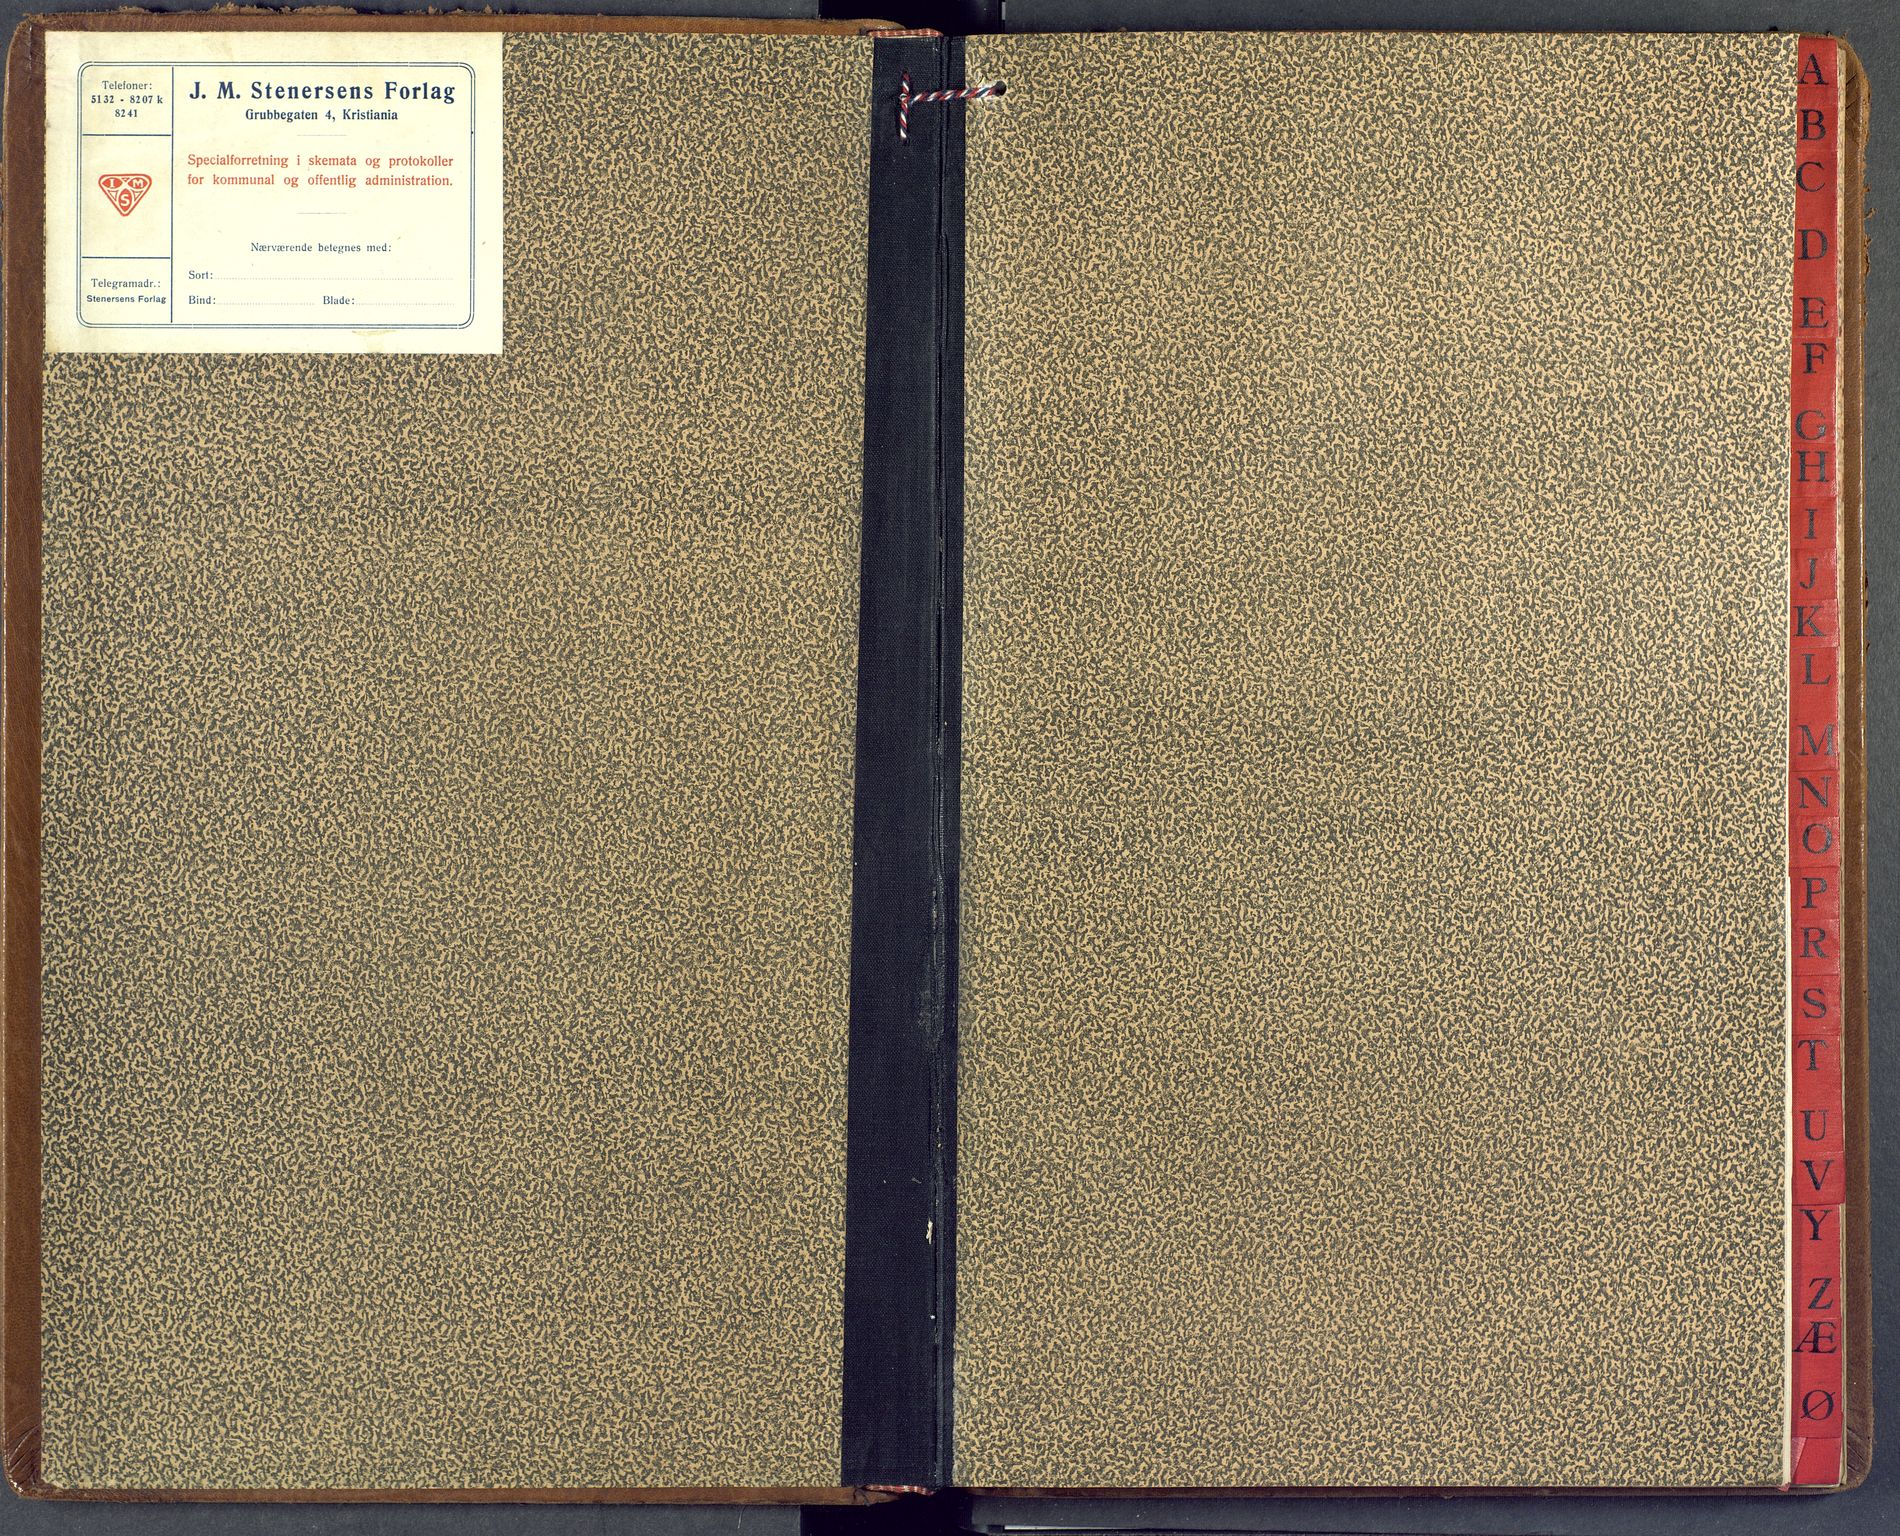 Sandsvær kirkebøker, SAKO/A-244/F/Fc/L0002: Ministerialbok nr. III 2, 1920-1959